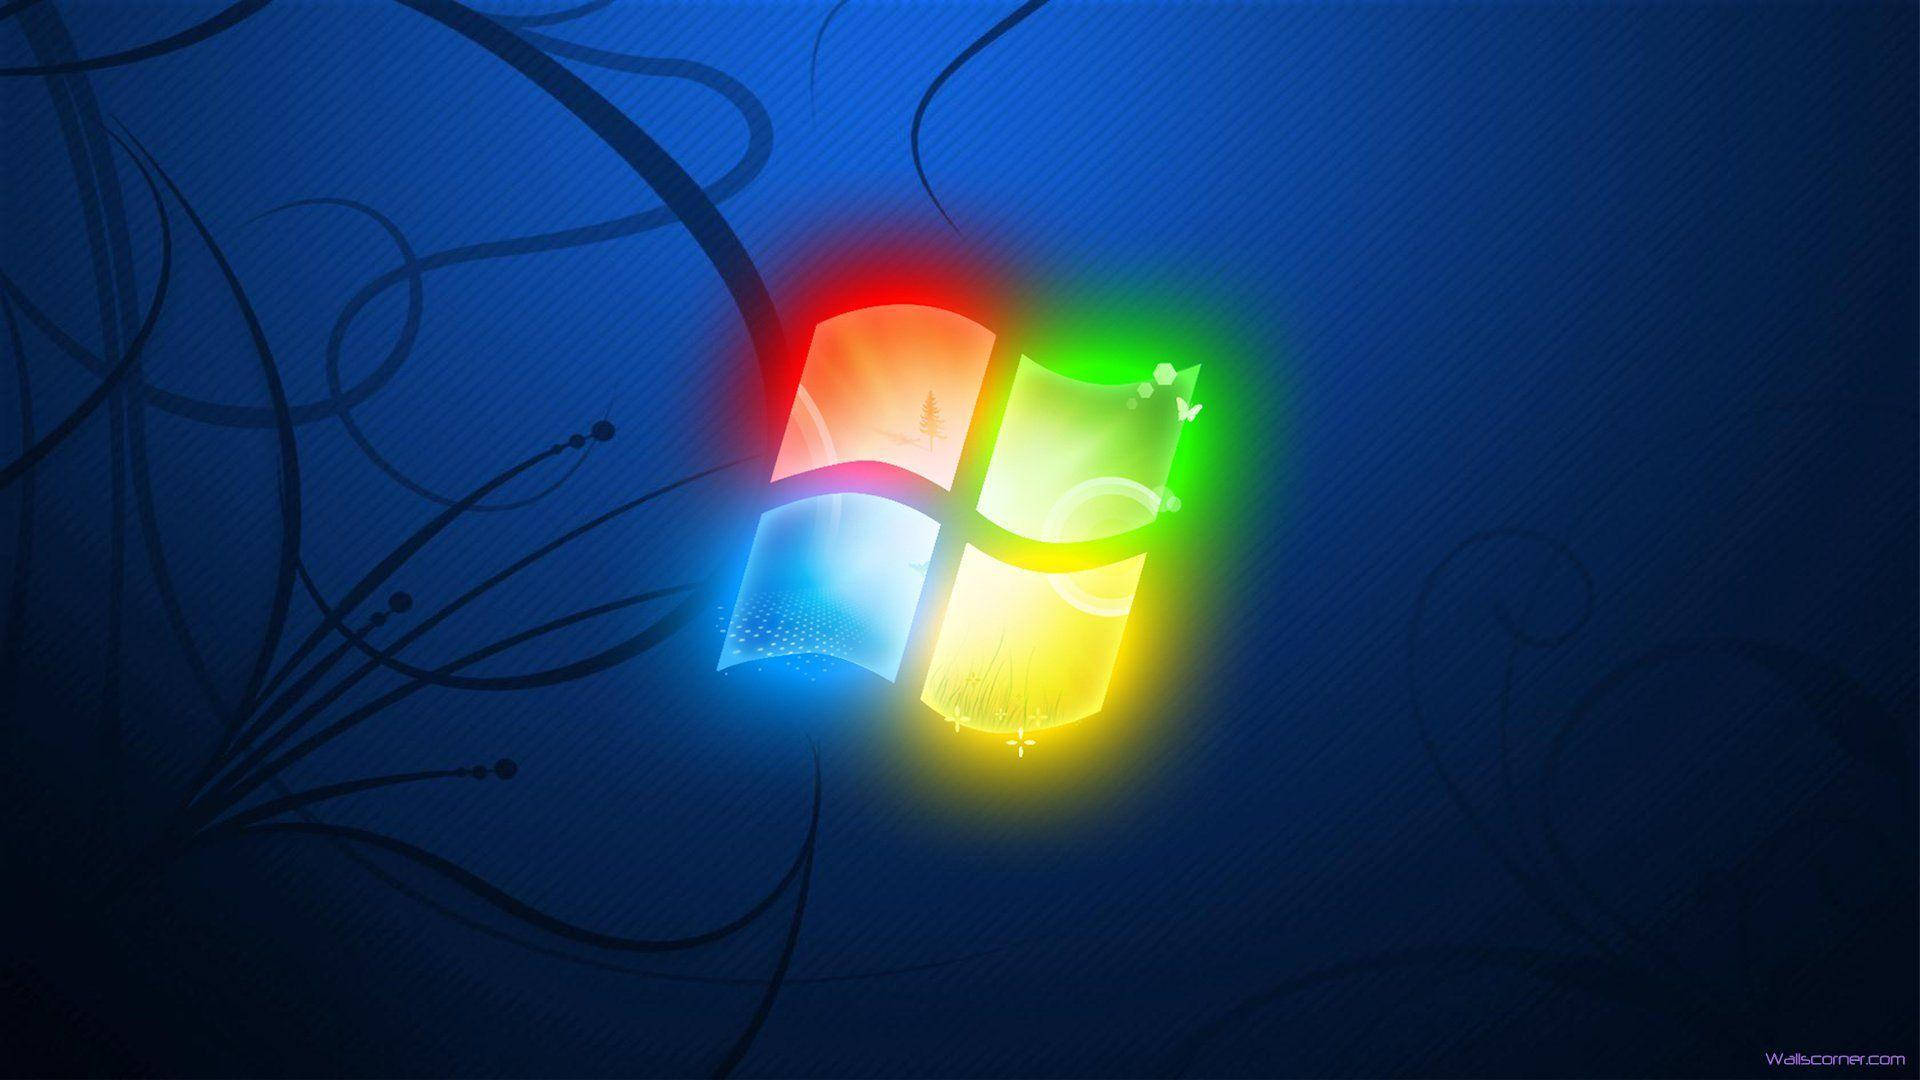 Luminescent Windows 7 logo Wallpaper